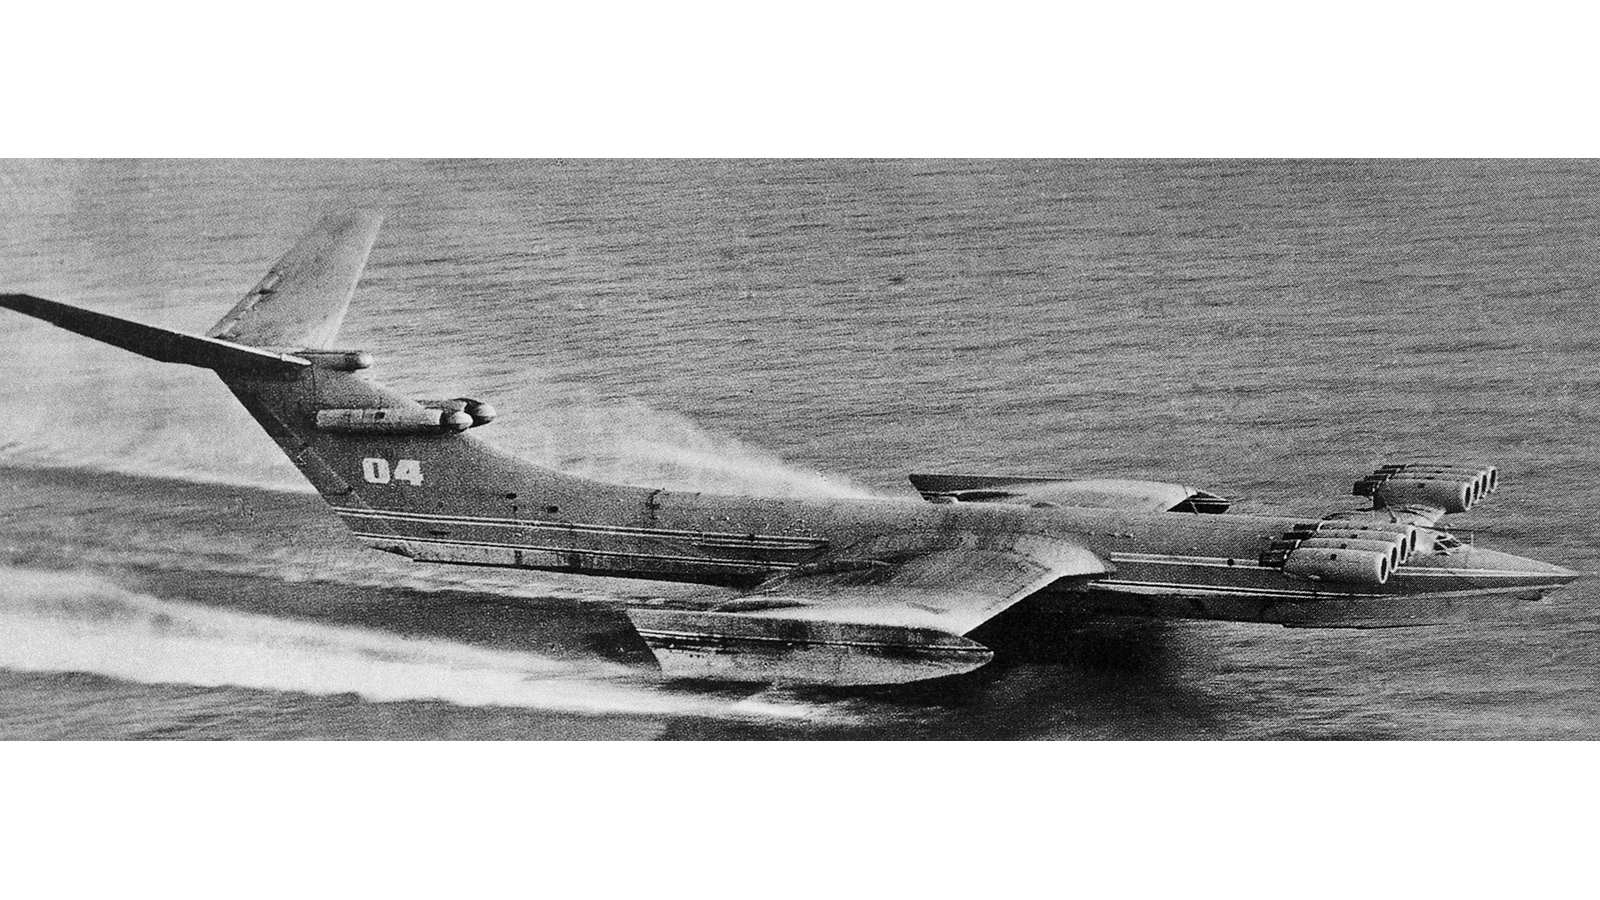 Caspian Sea Monster: See the Soviets' 1960s ekranoplan and modern hybrids